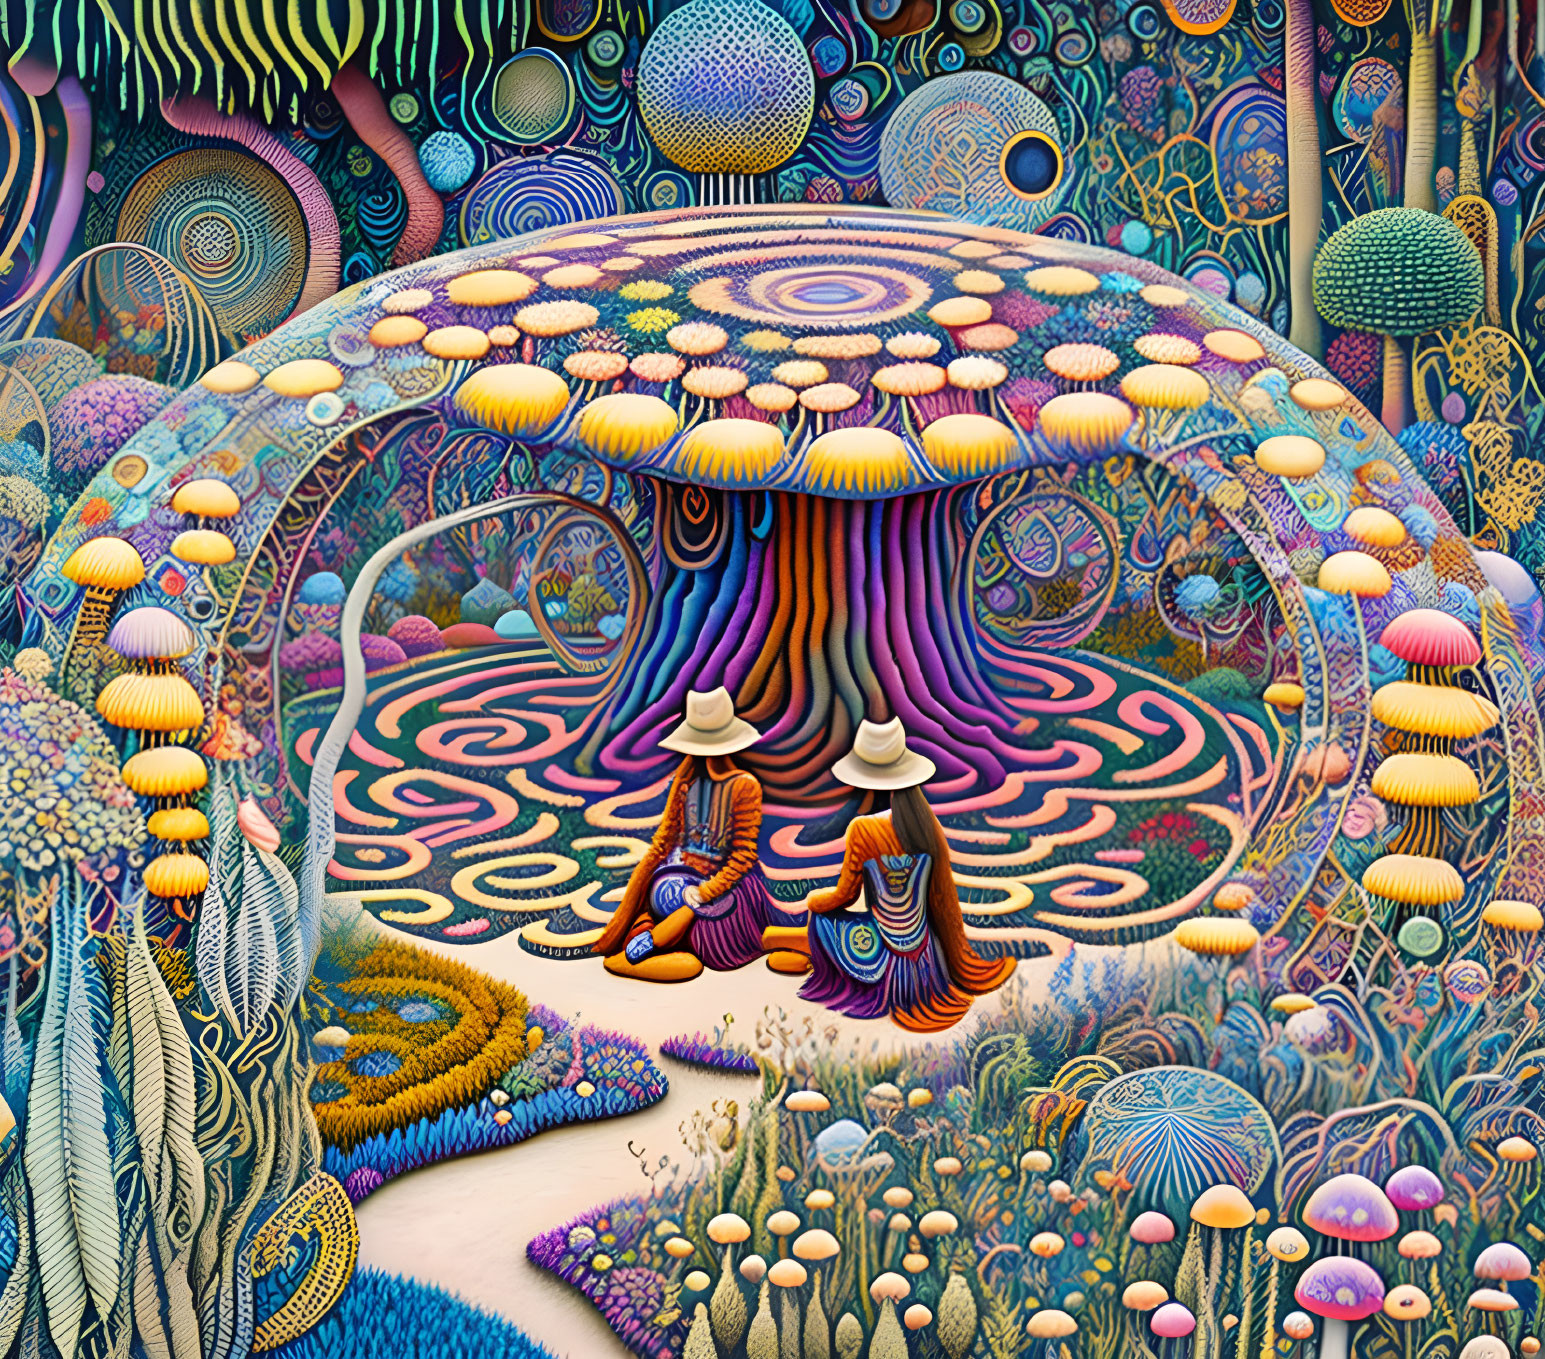 Mushroom Maze Carpets of the Home Dome